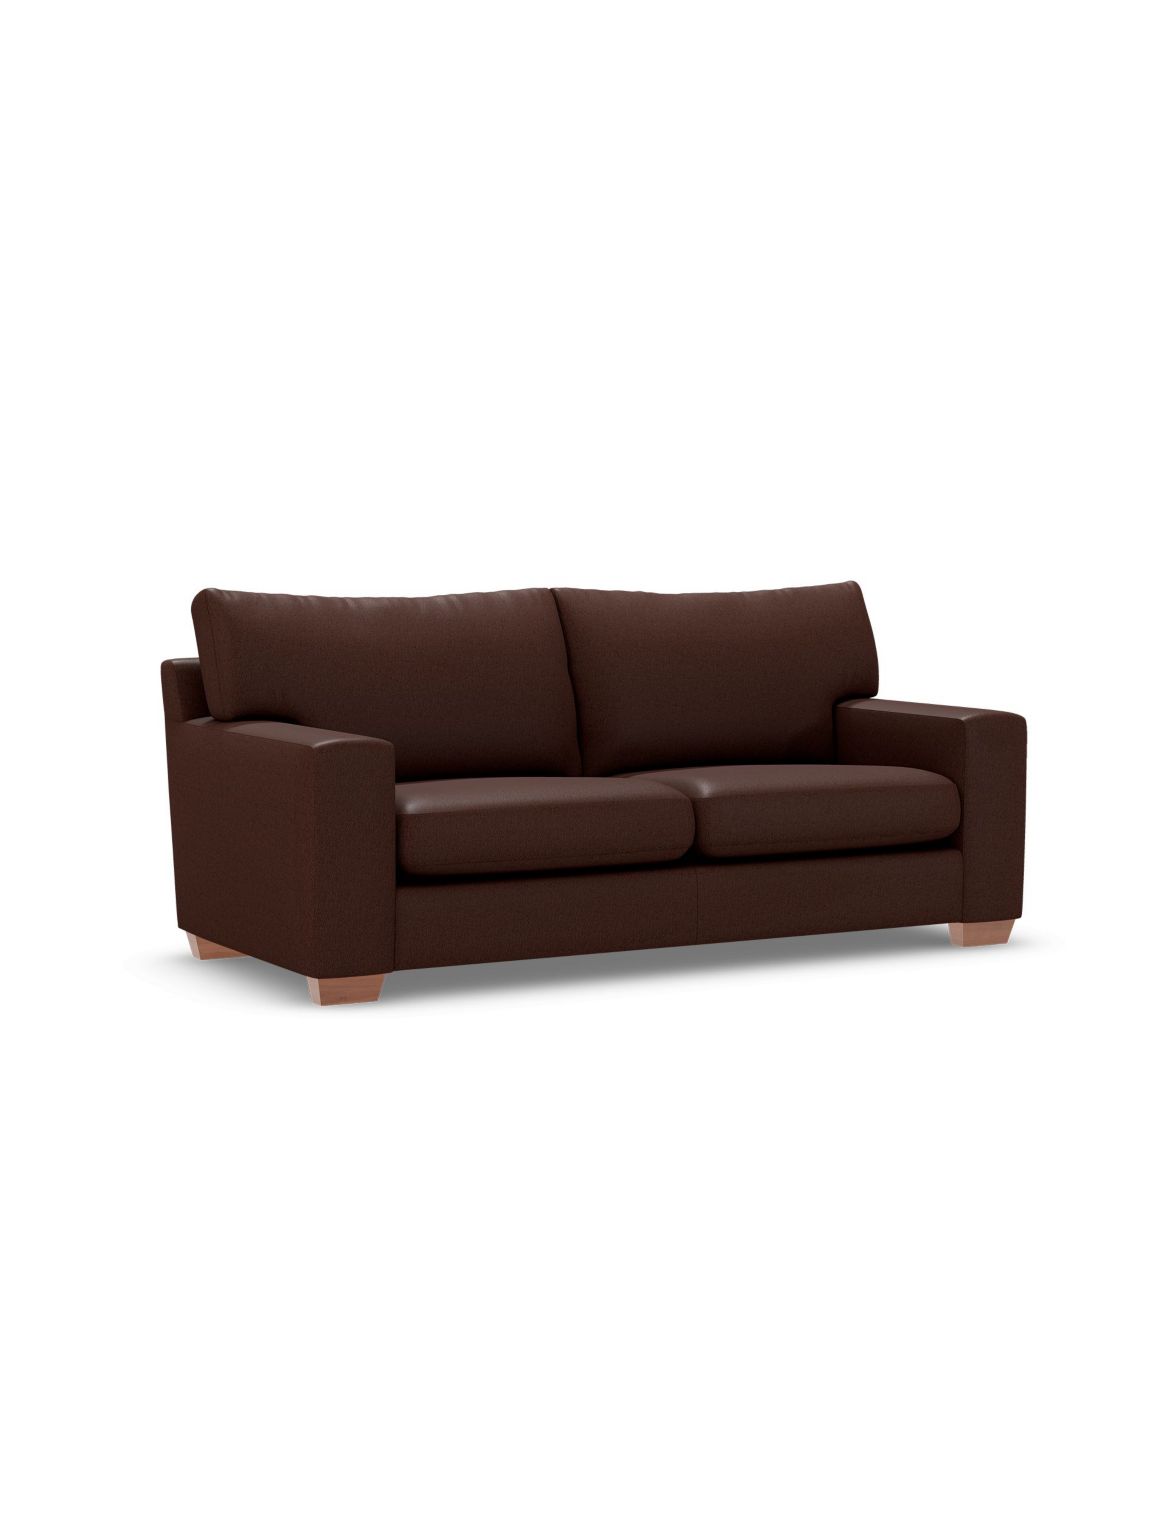 Alfie Medium Sofa brown